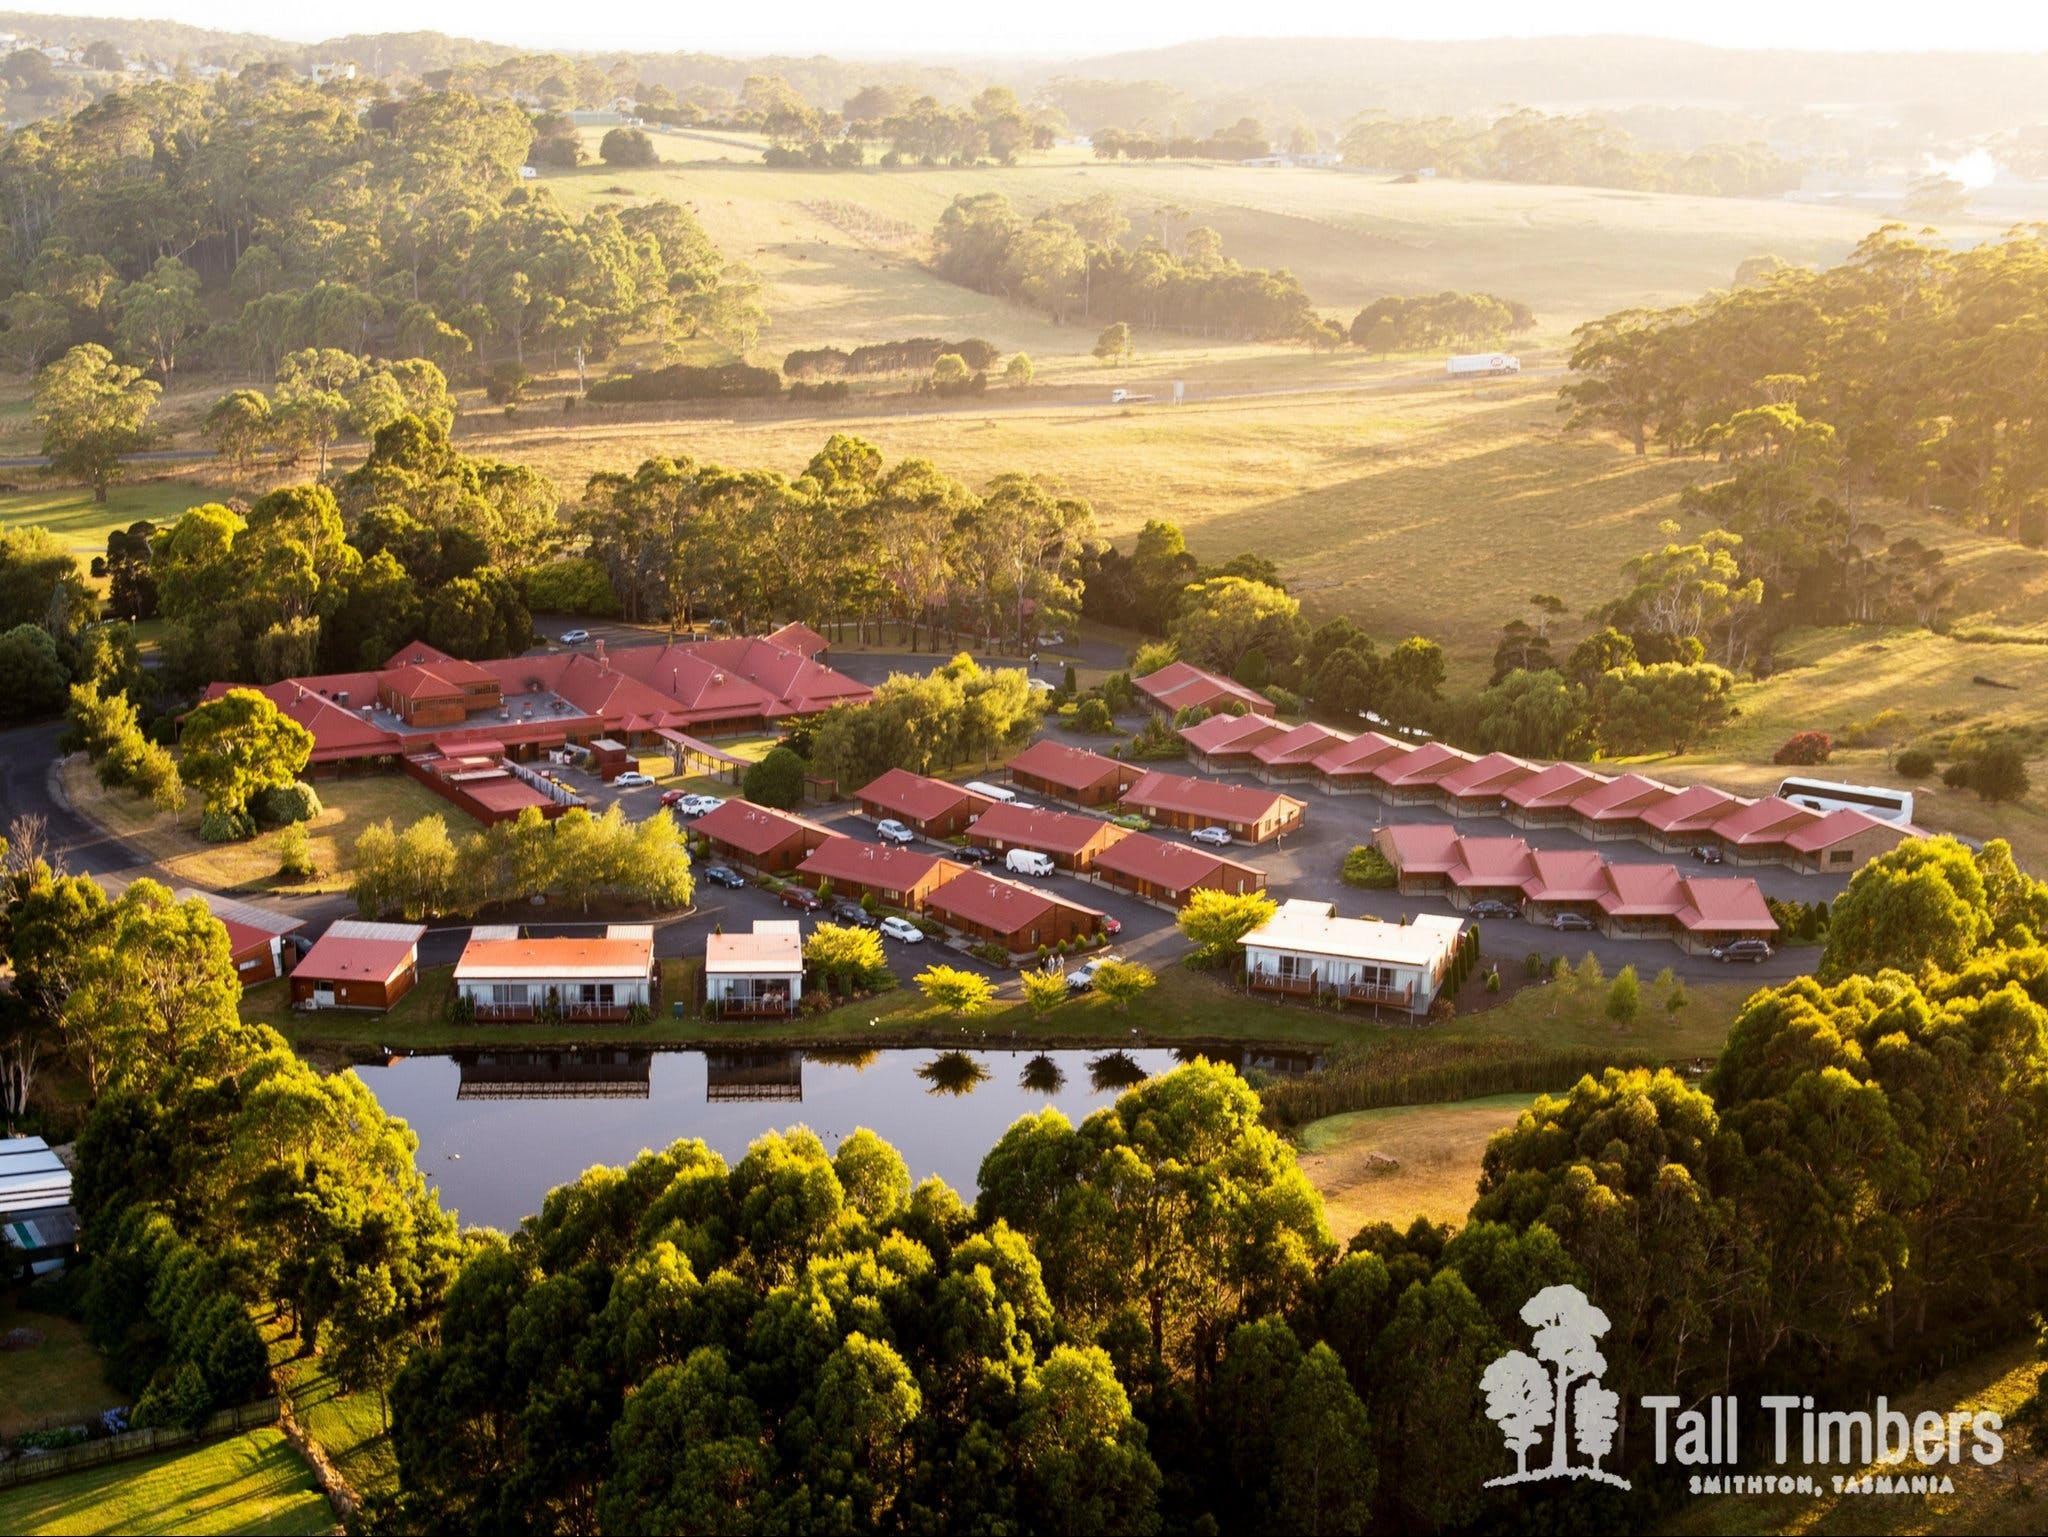 Tall Timbers Tasmania - Accommodation Resorts